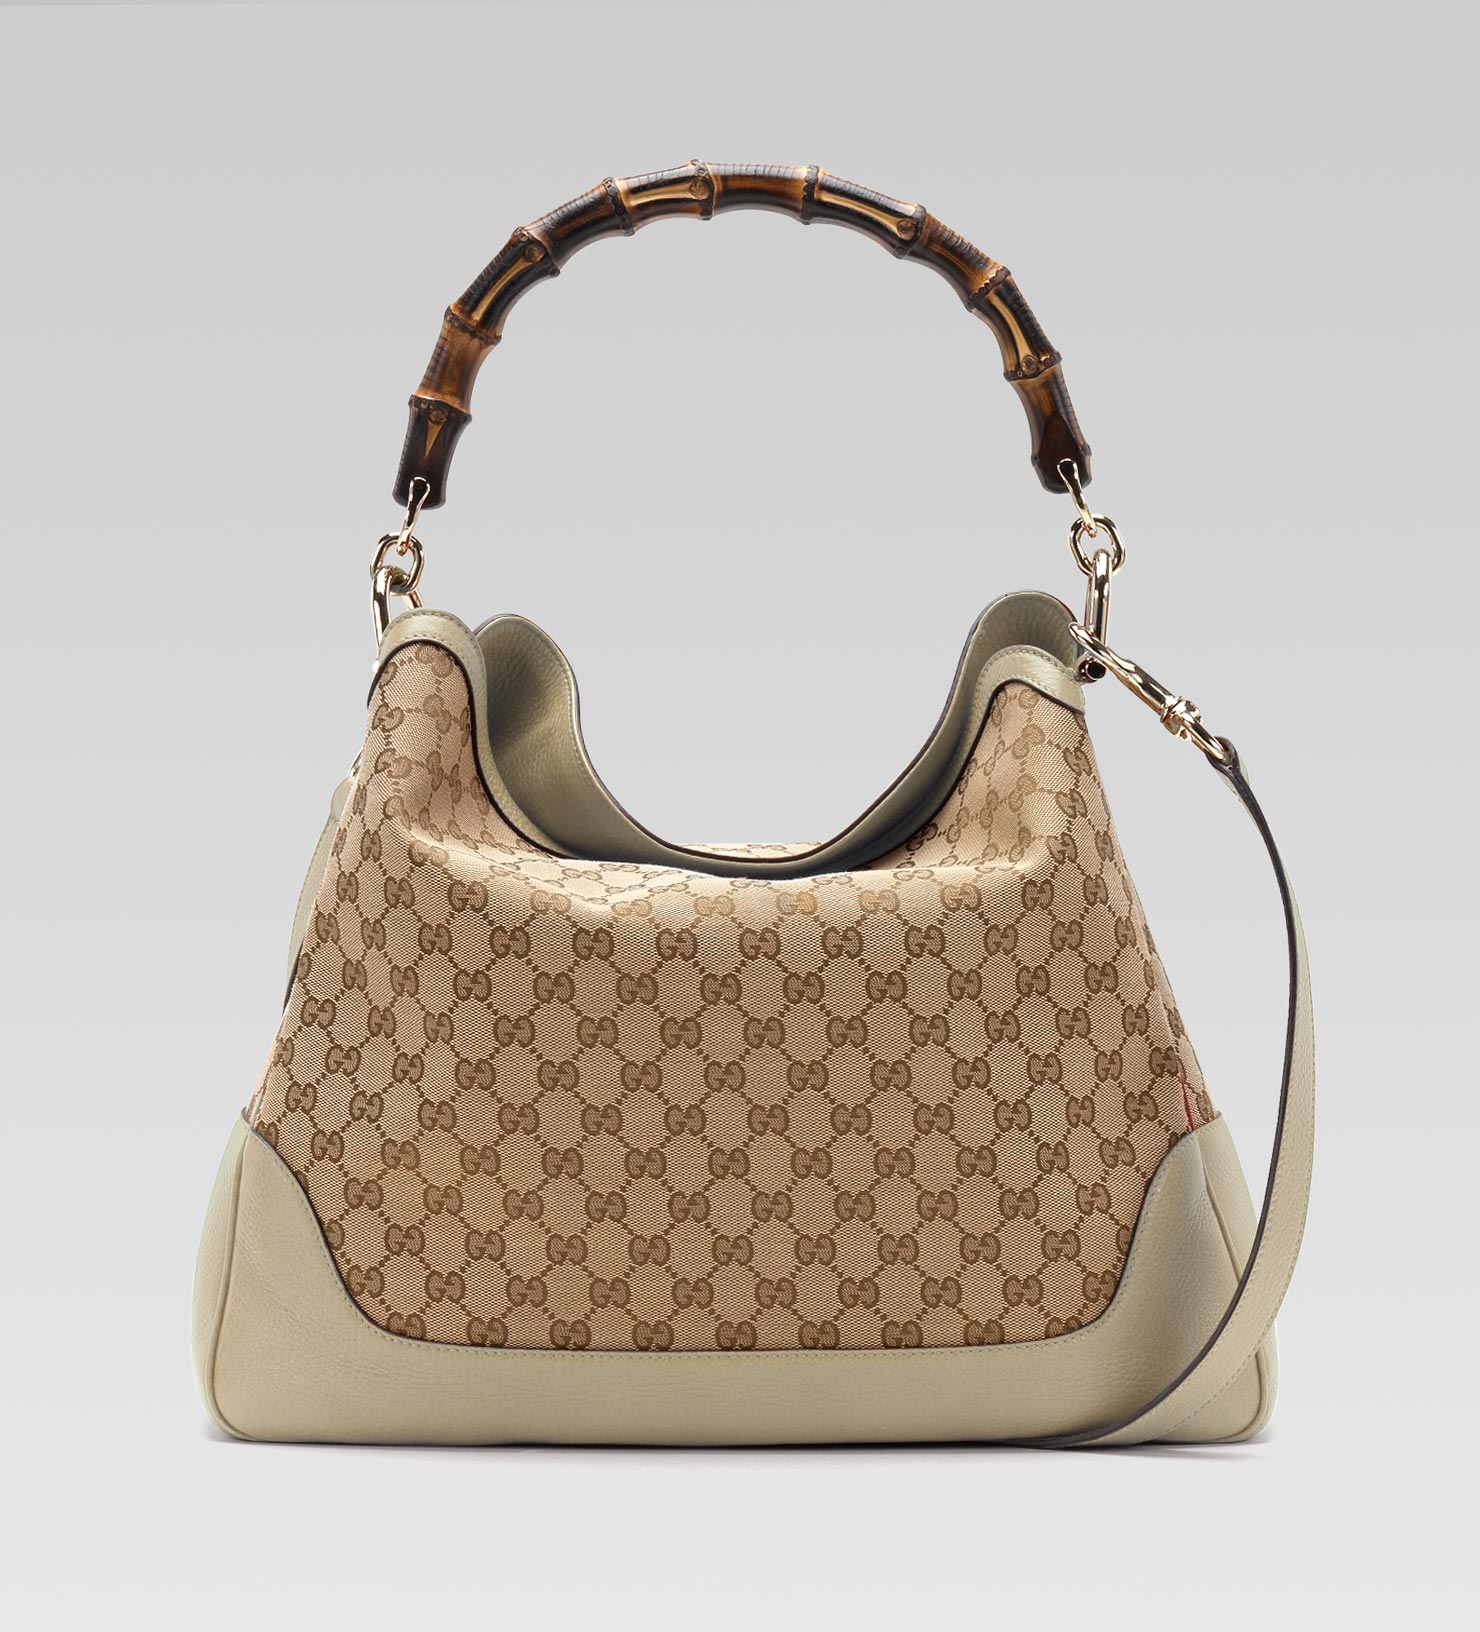 Lyst - Gucci Diana Bamboo Handle Shoulder Bag in Natural